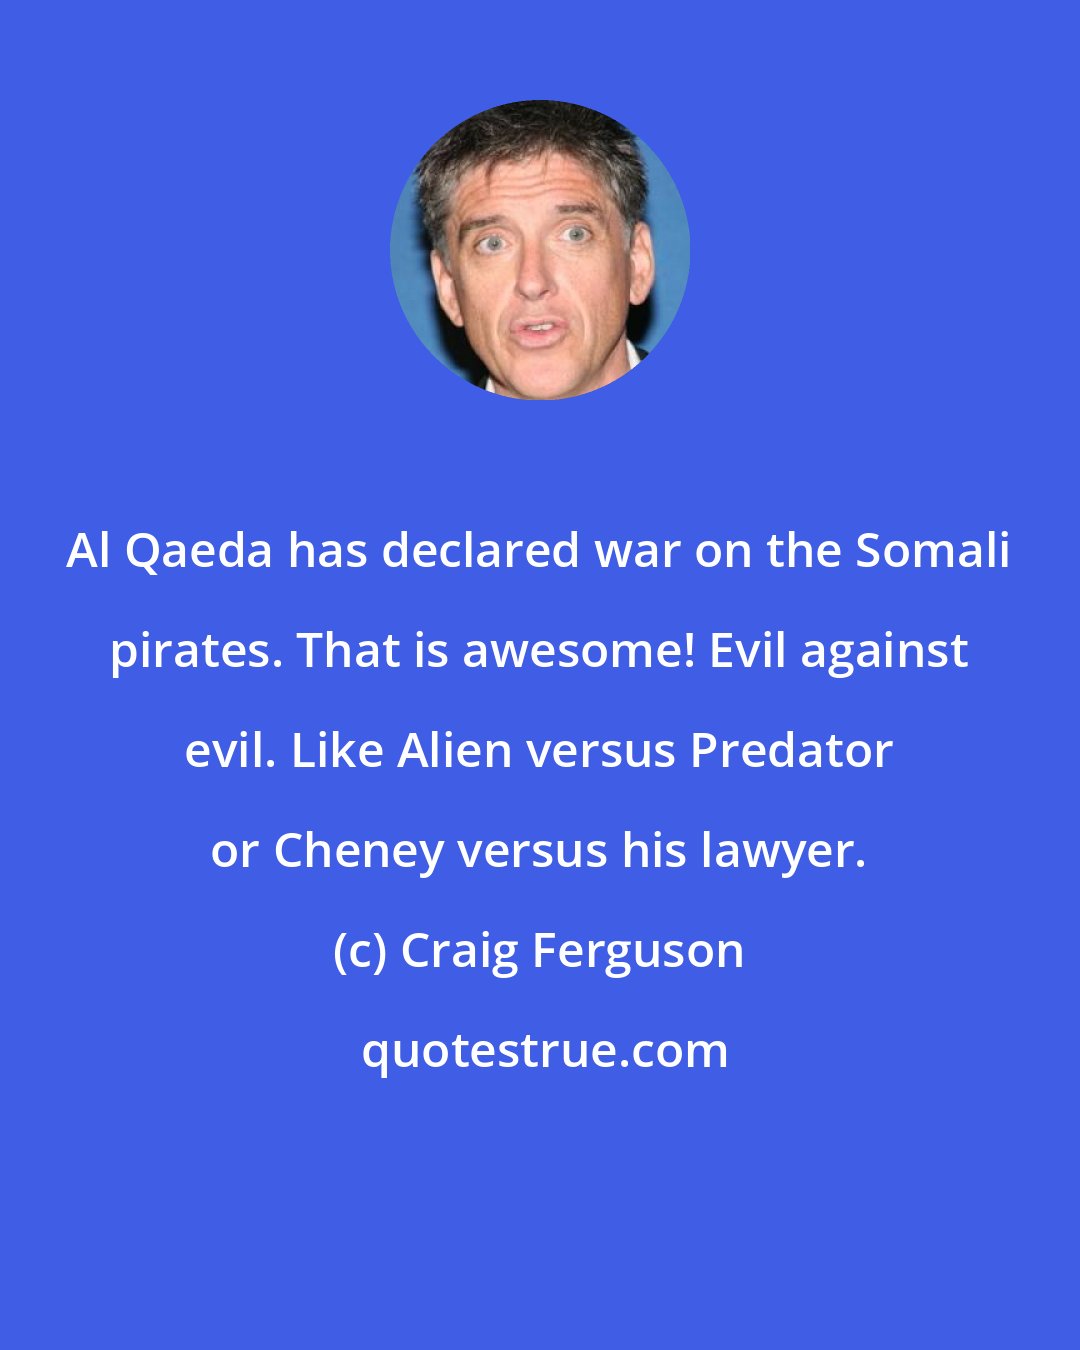 Craig Ferguson: Al Qaeda has declared war on the Somali pirates. That is awesome! Evil against evil. Like Alien versus Predator or Cheney versus his lawyer.